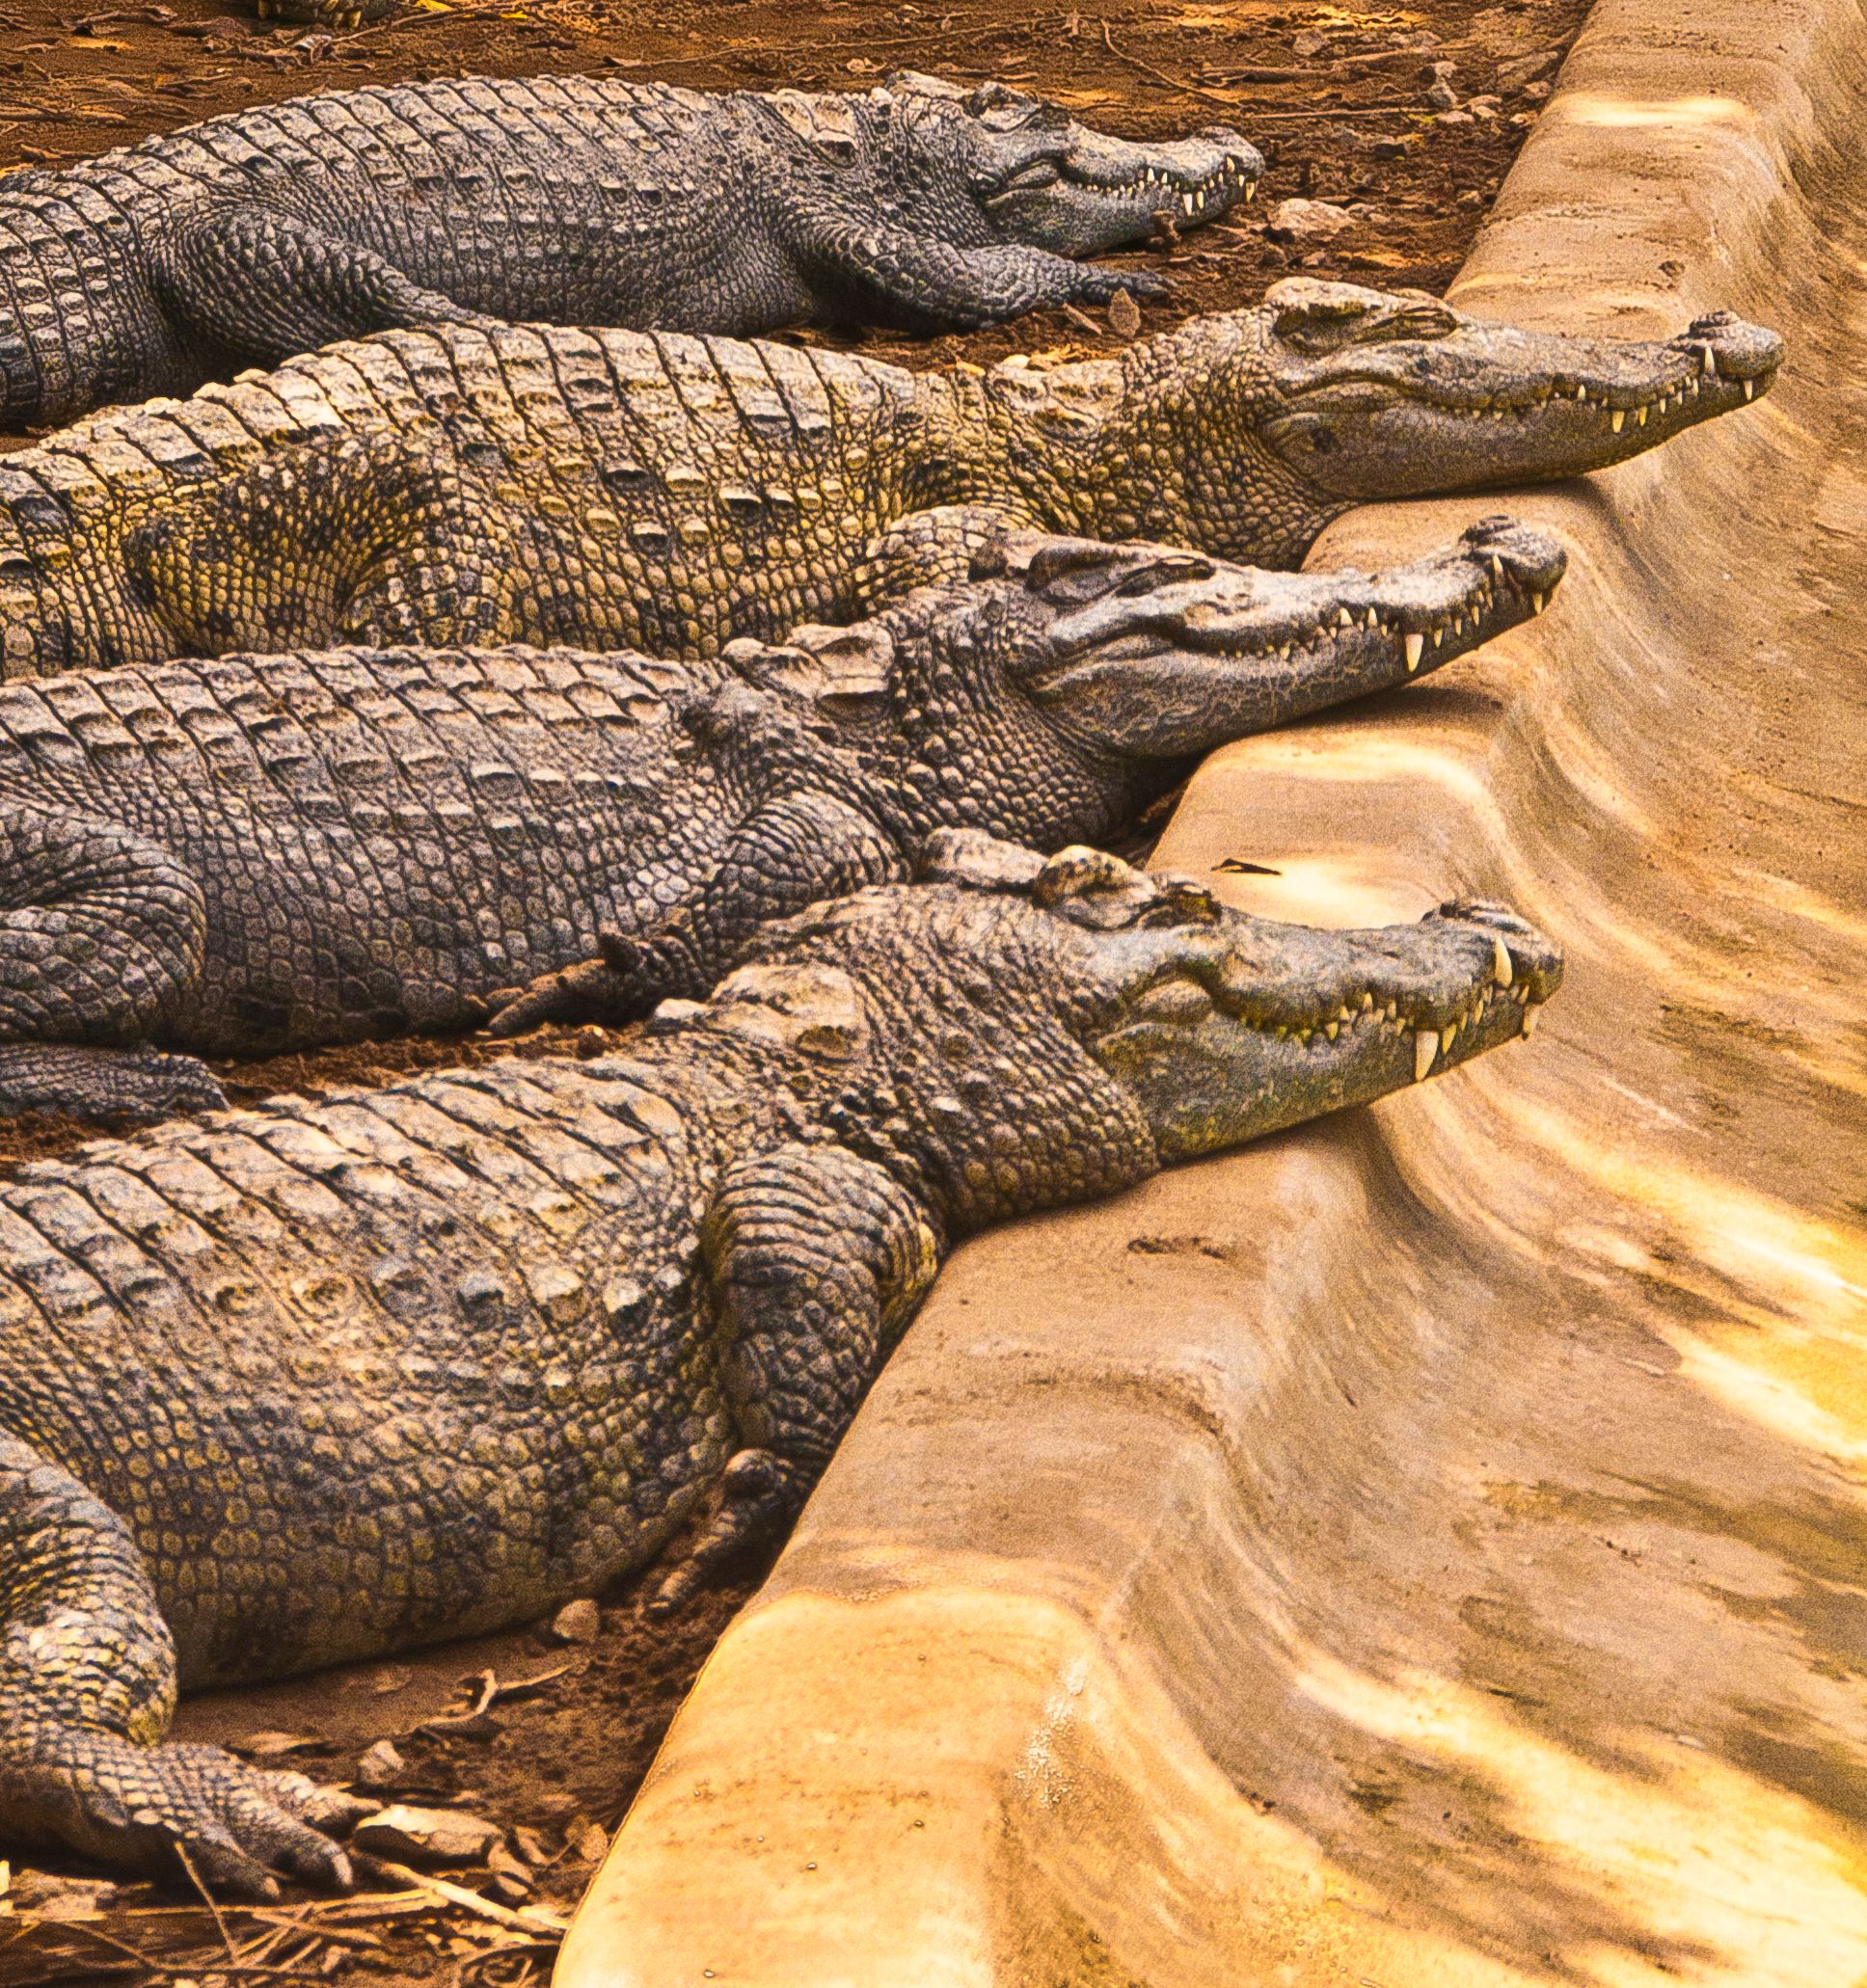 Alligators Sunbathing, Vietnam